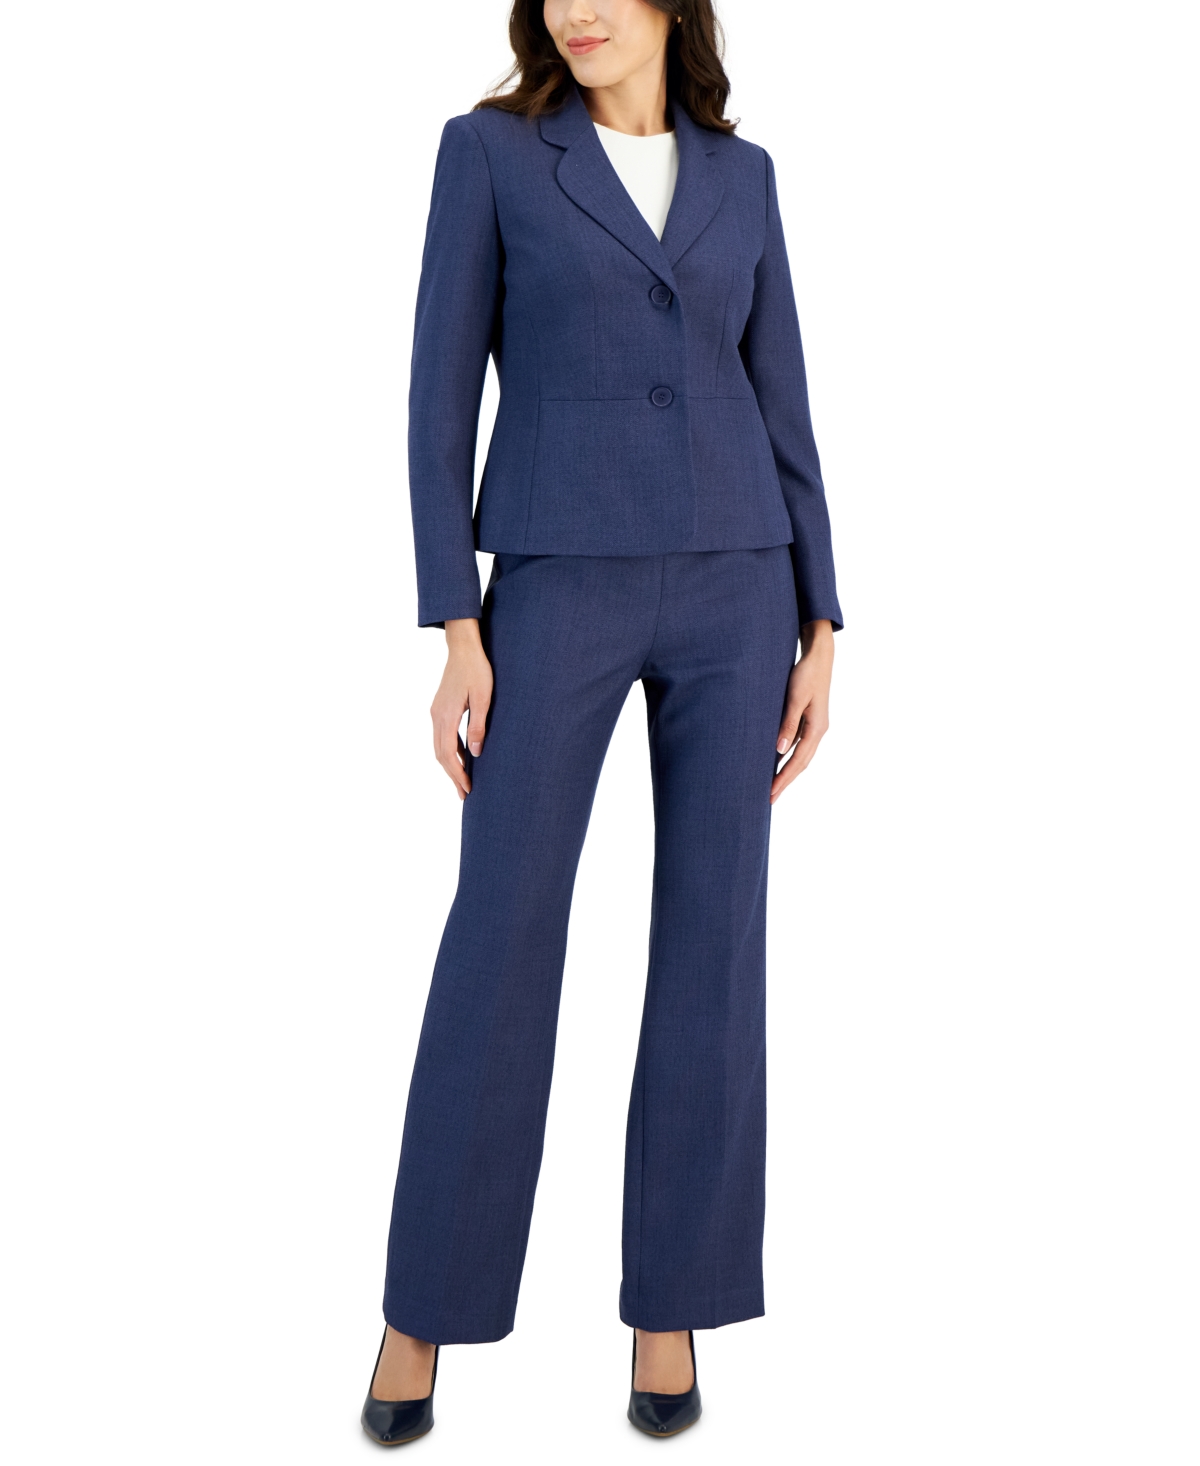 Women's Notch-Collar Pantsuit, Regular and Petite Sizes - Deep Cobalt